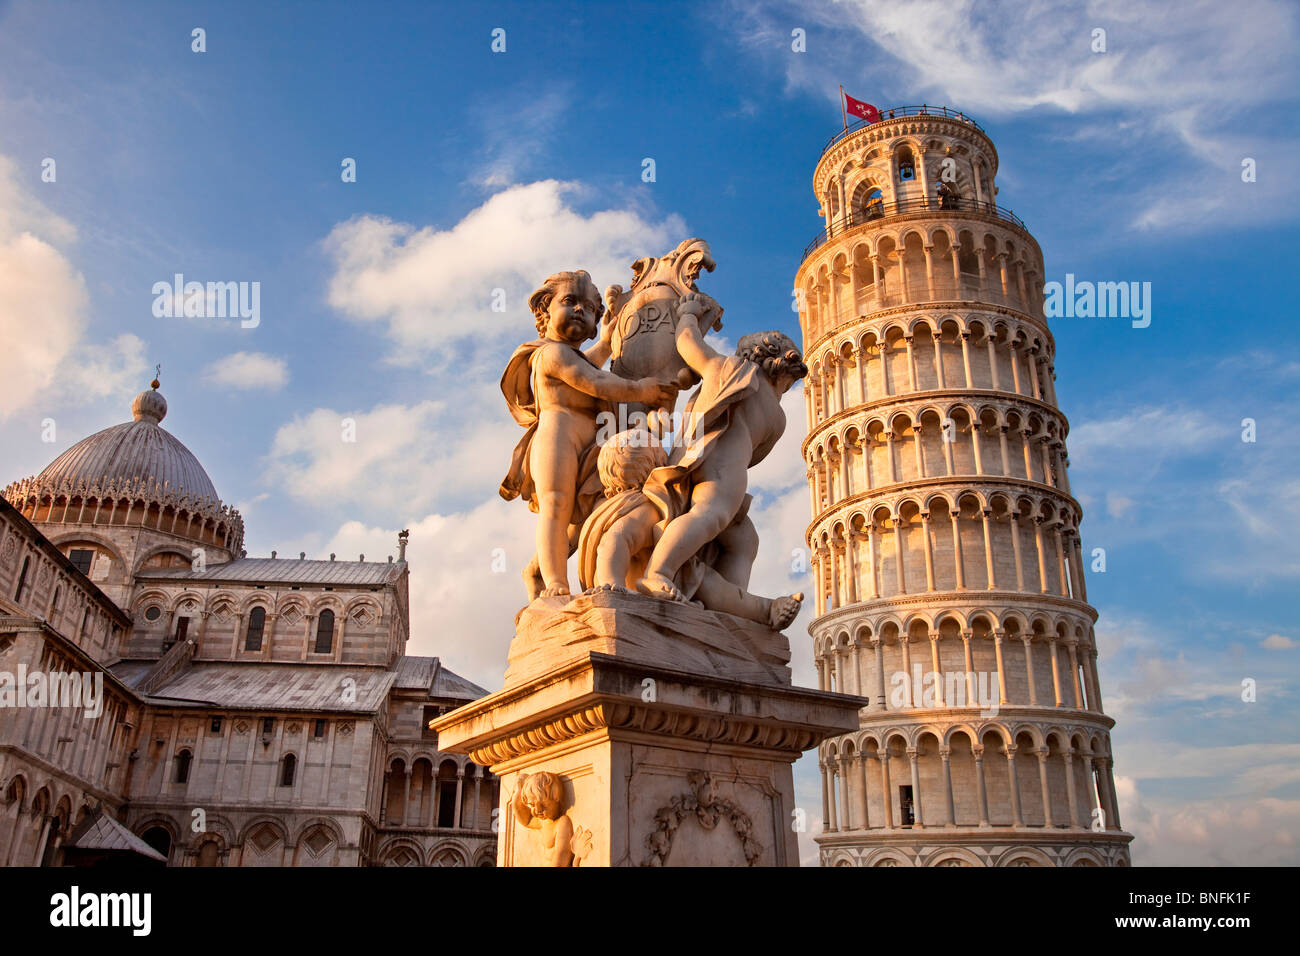 Cherub statue, duomo and the leaning tower, Pisa Tuscany Italy Stock Photo